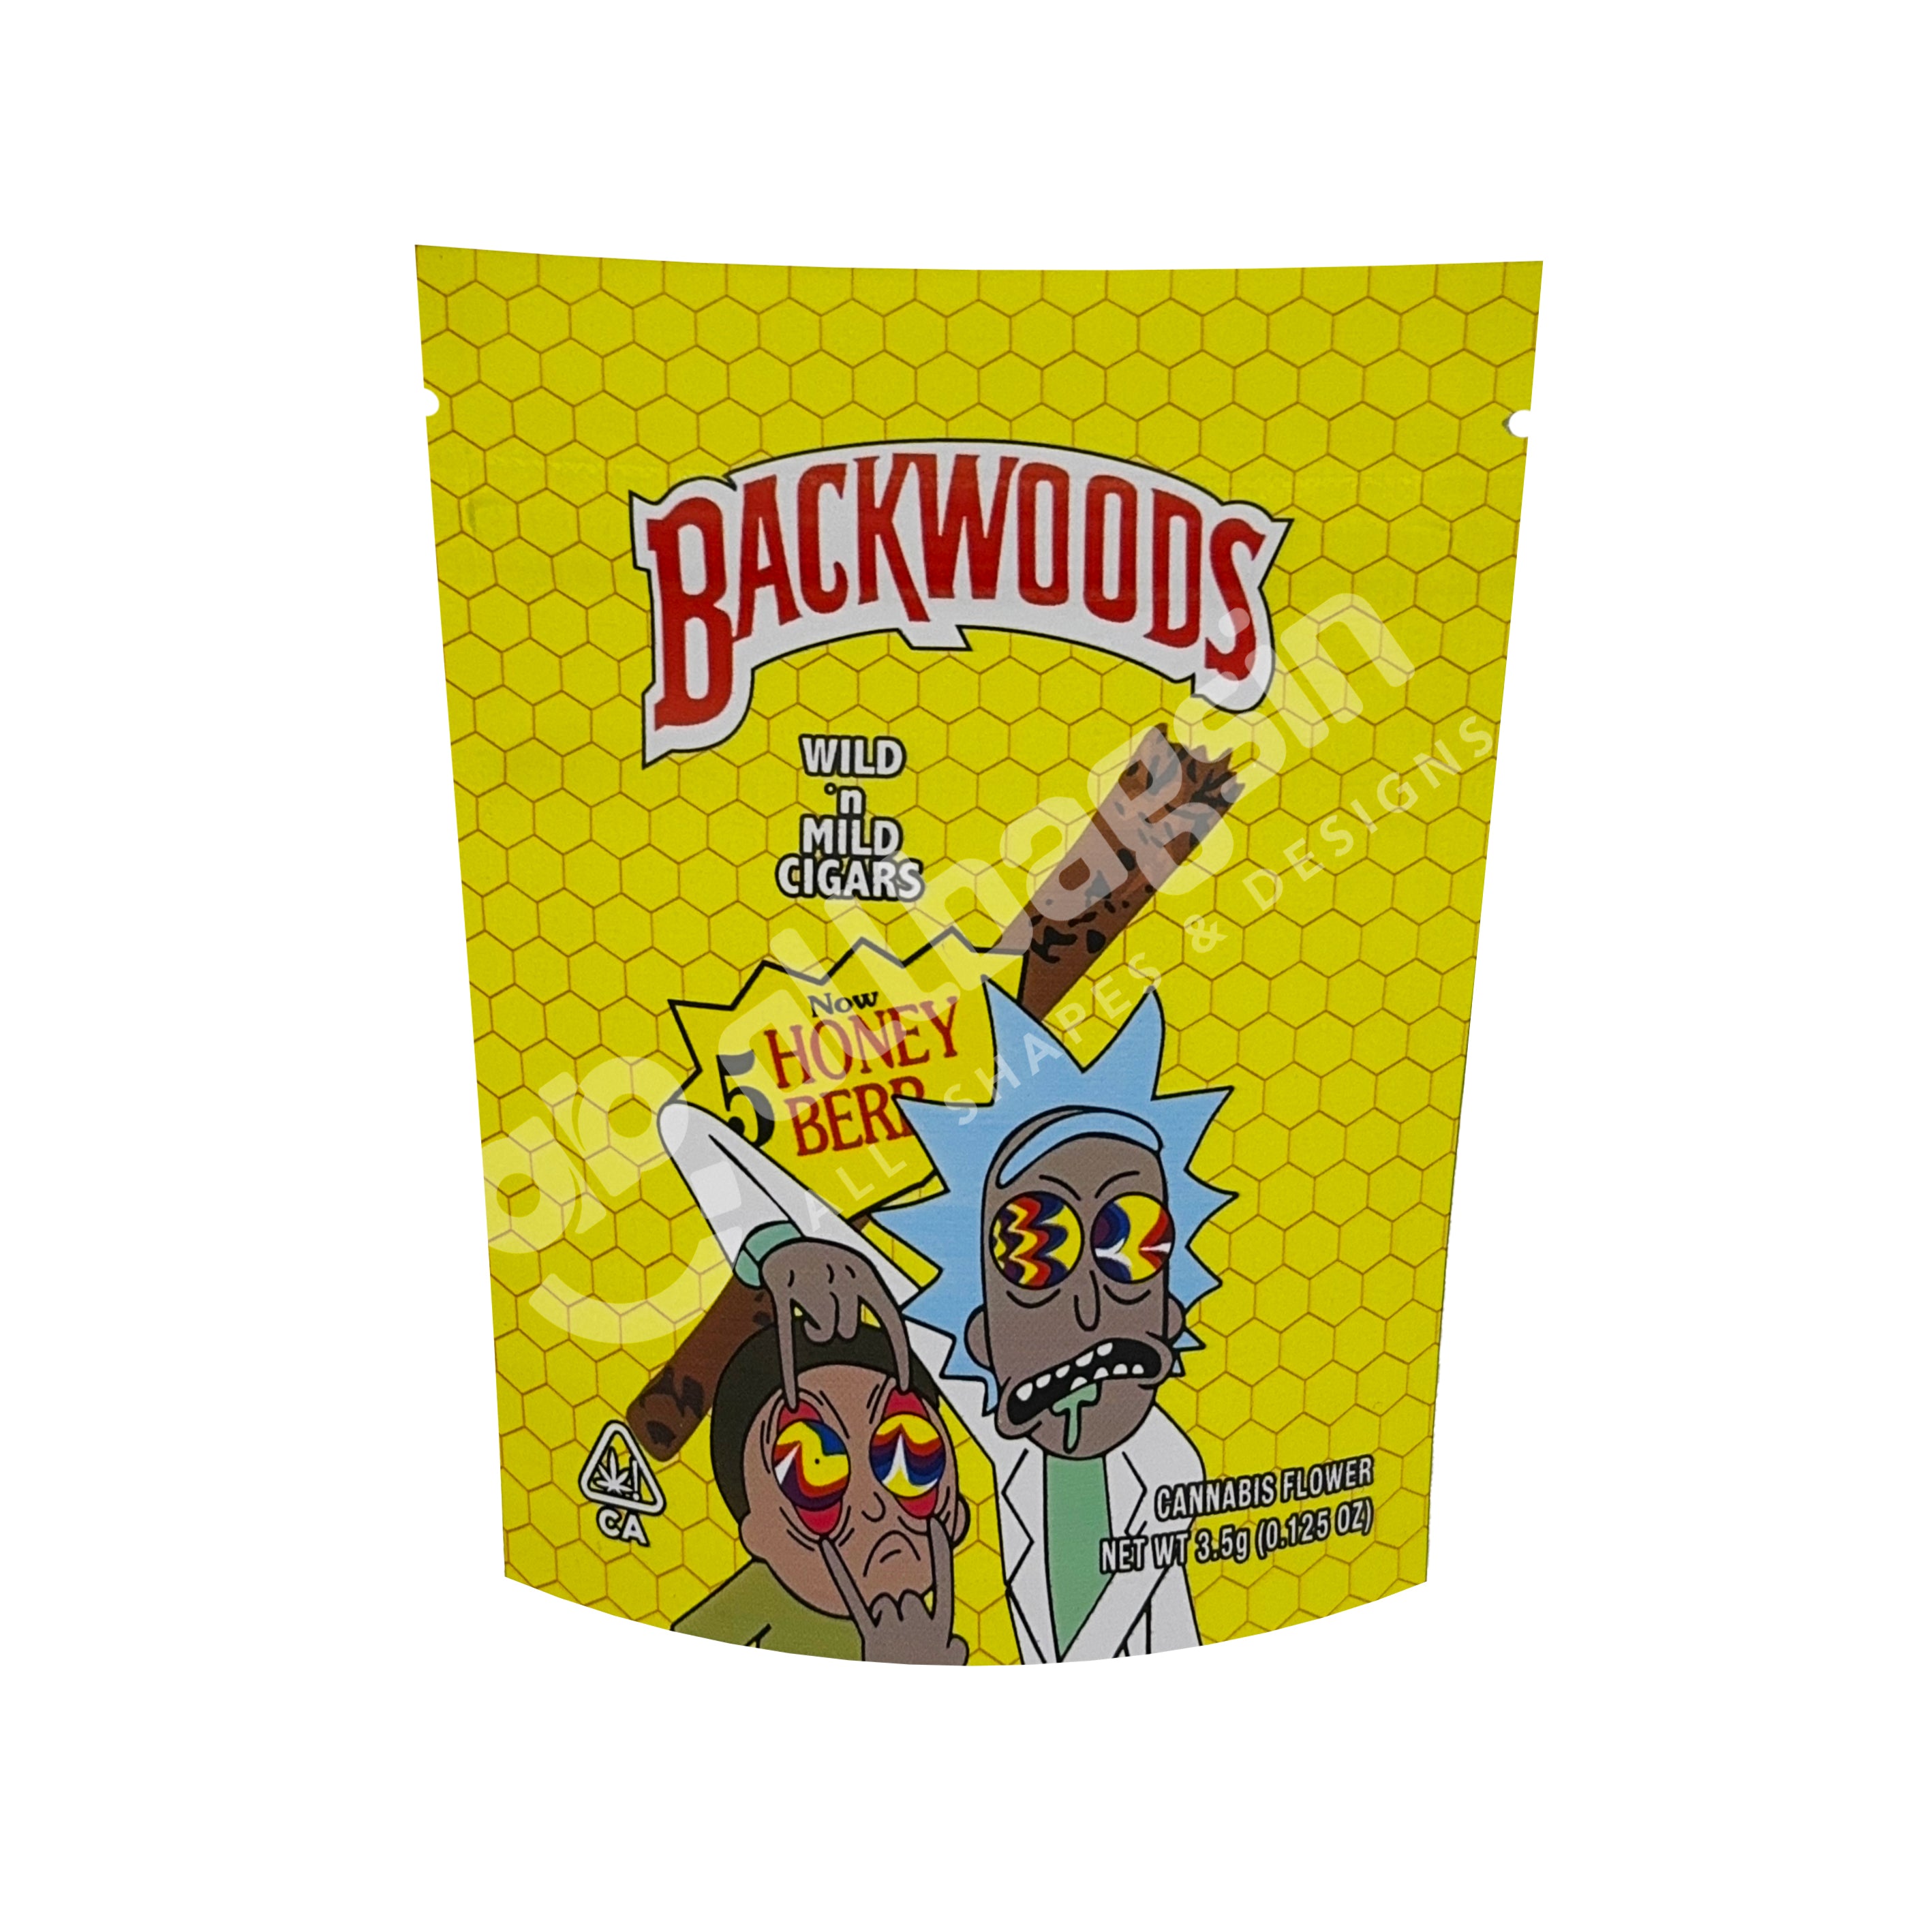 Backwoods Rick & Morty 5 honey herb 3.5g Mylar Bag